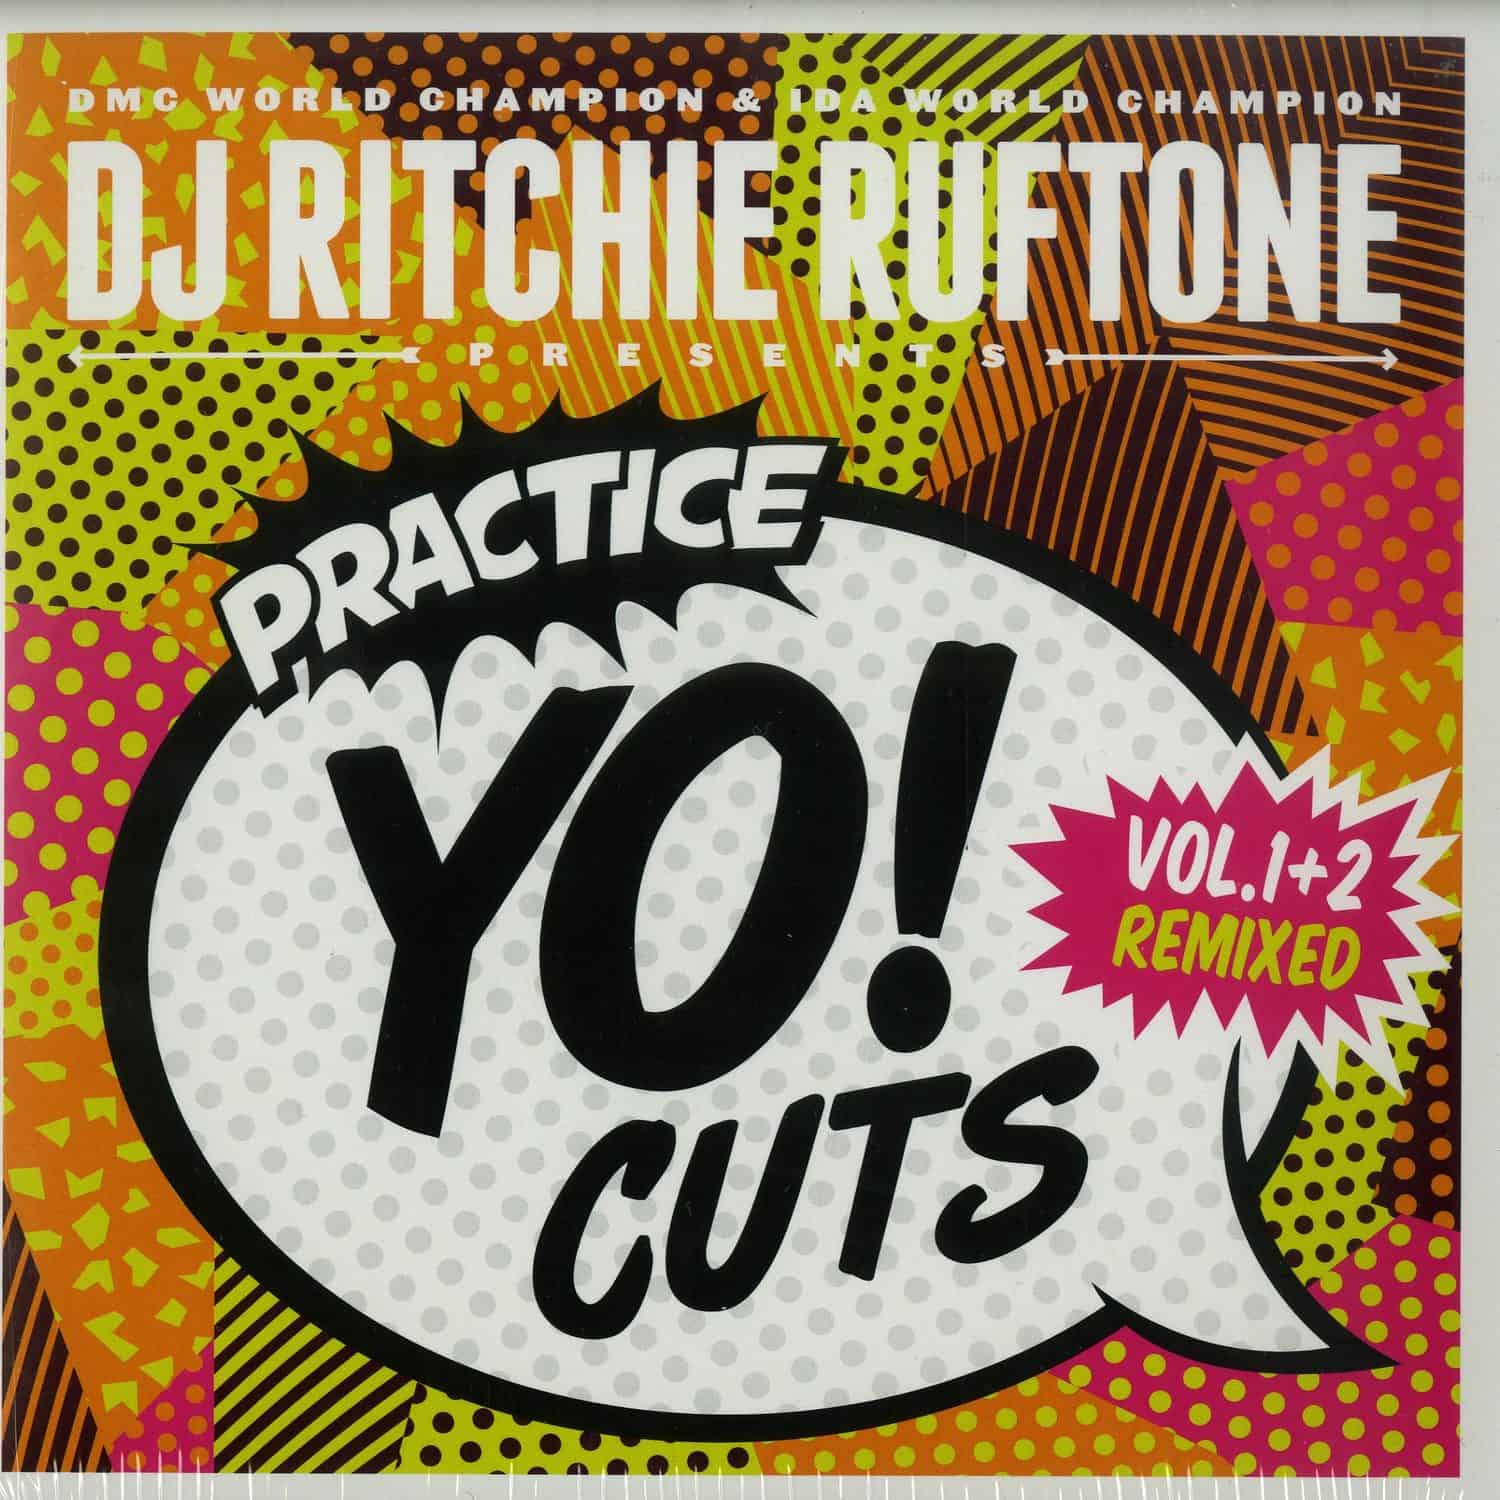 DJ Ritchie Ruftone - PRACTISE YO CUTS! 